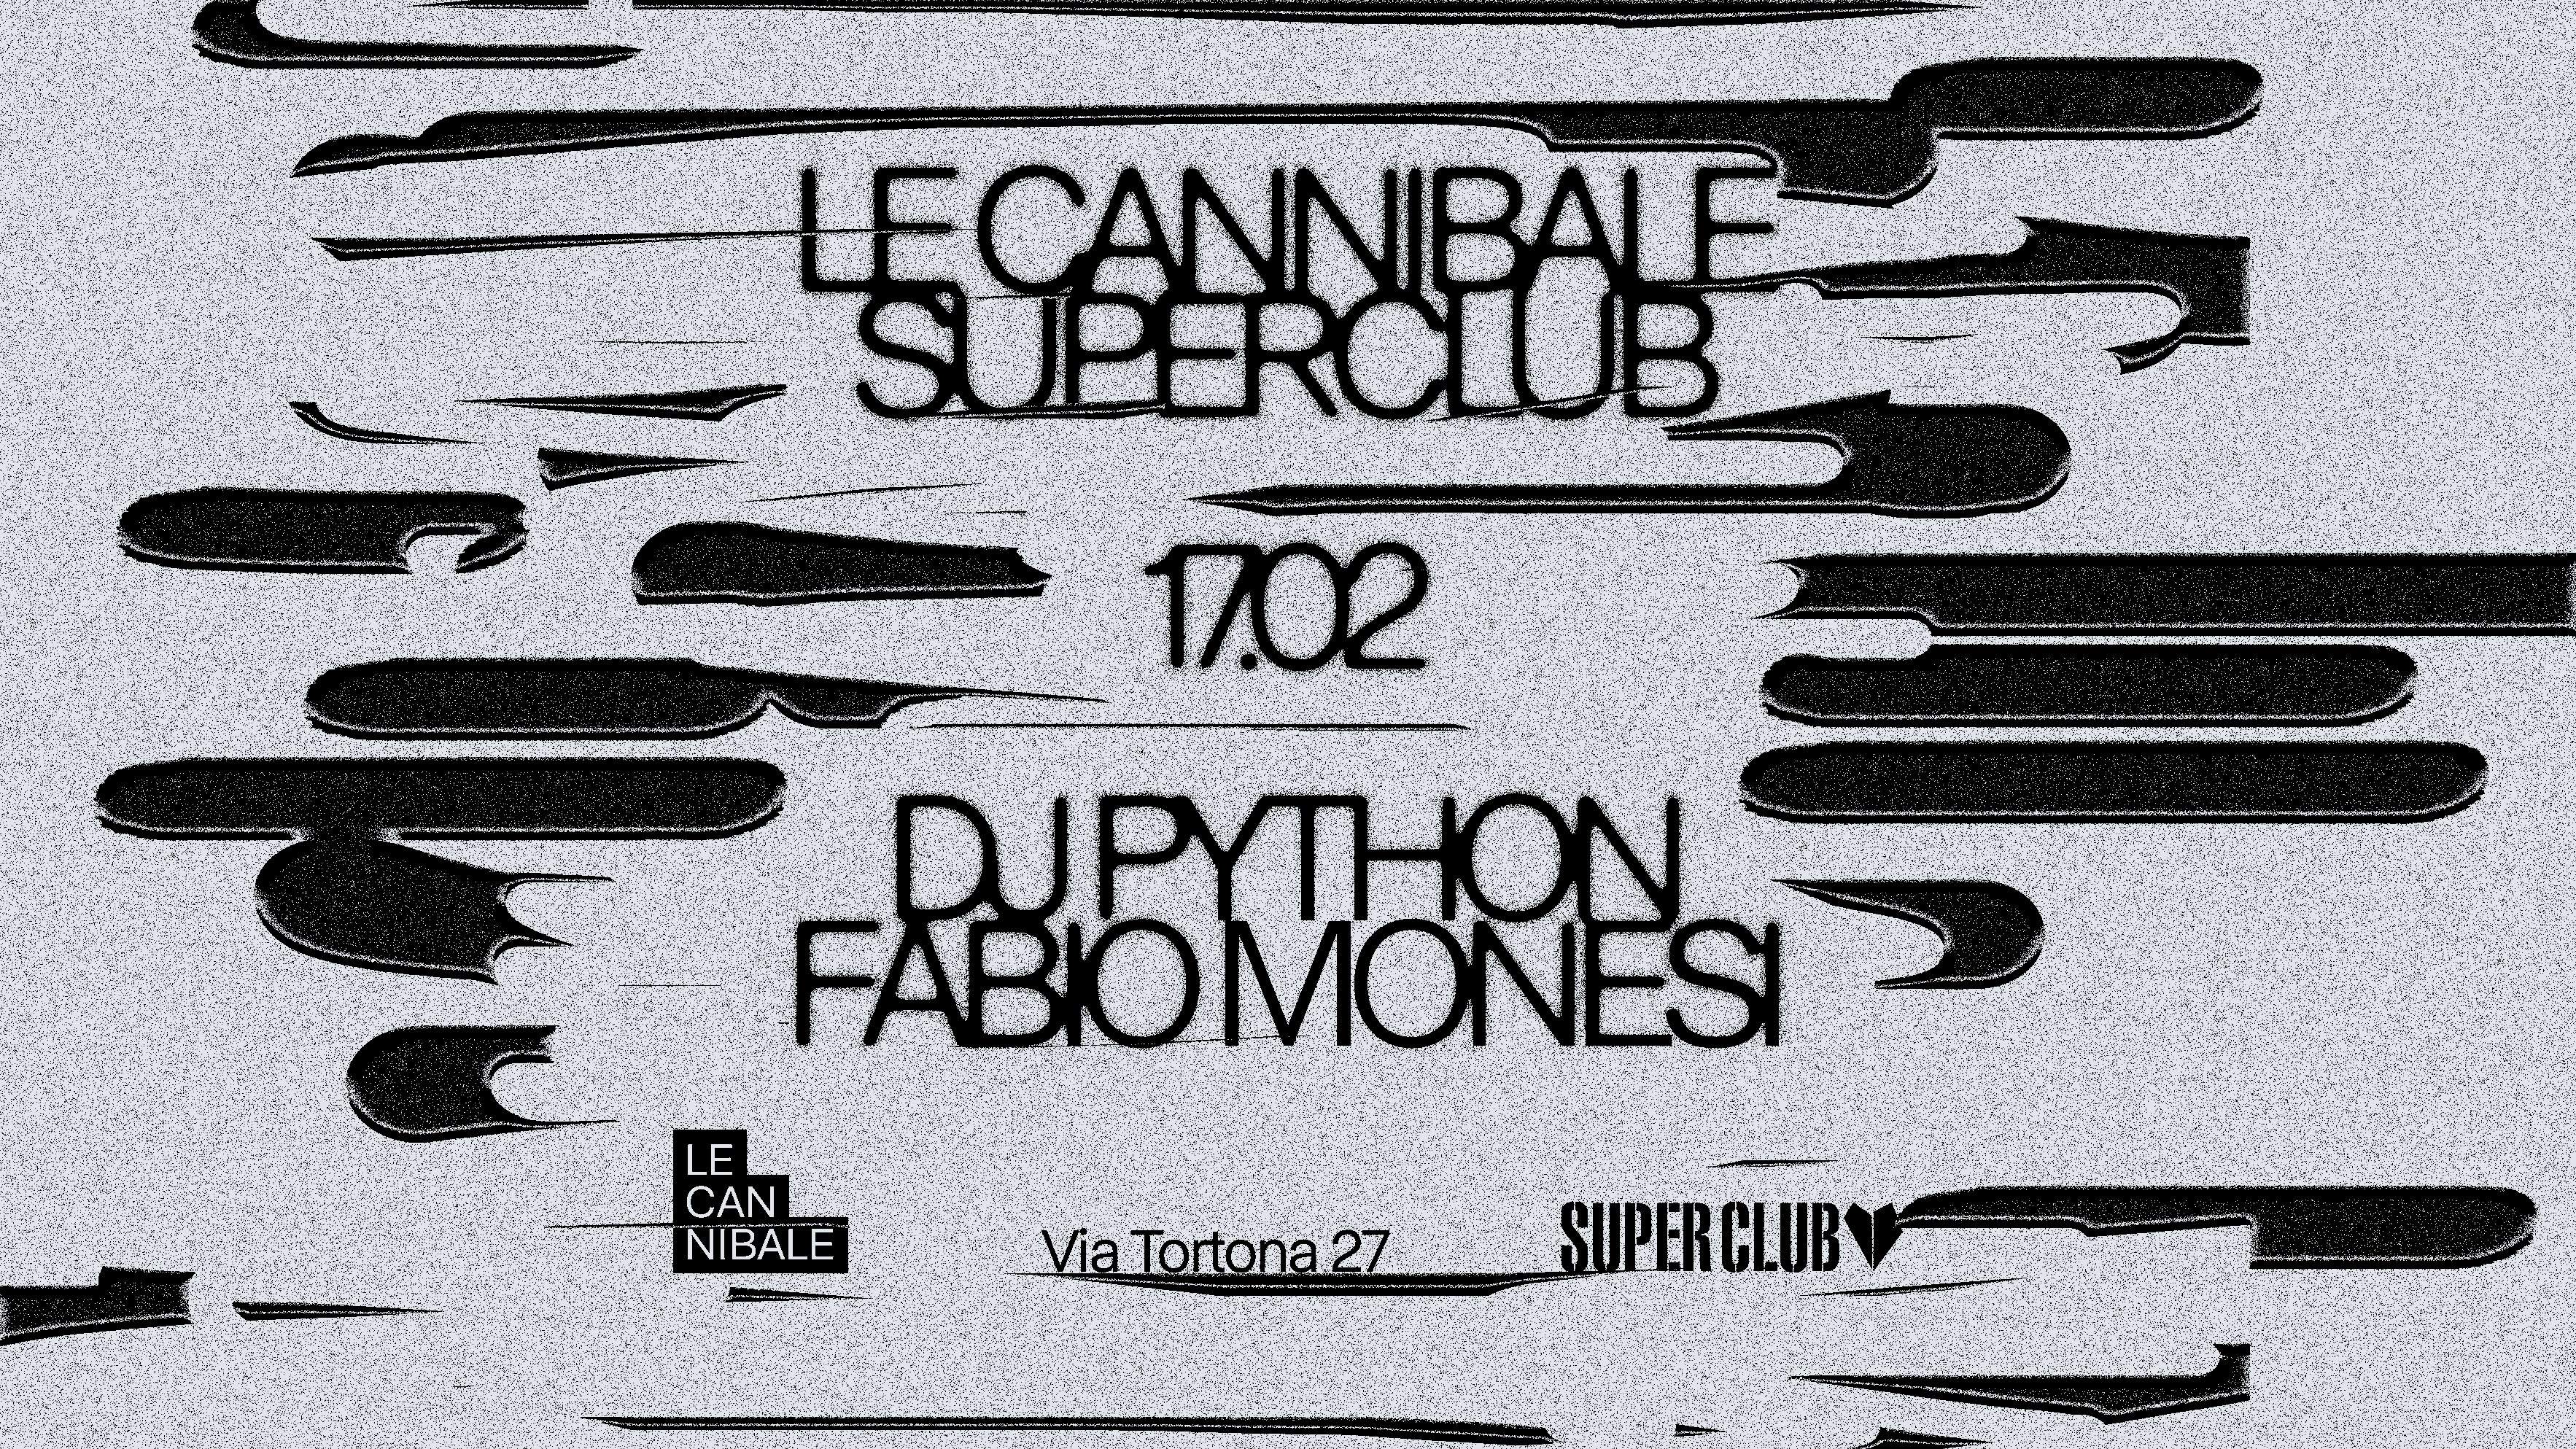 Le Cannibale Superclub - DJ Python, Fabio Monesi - フライヤー表